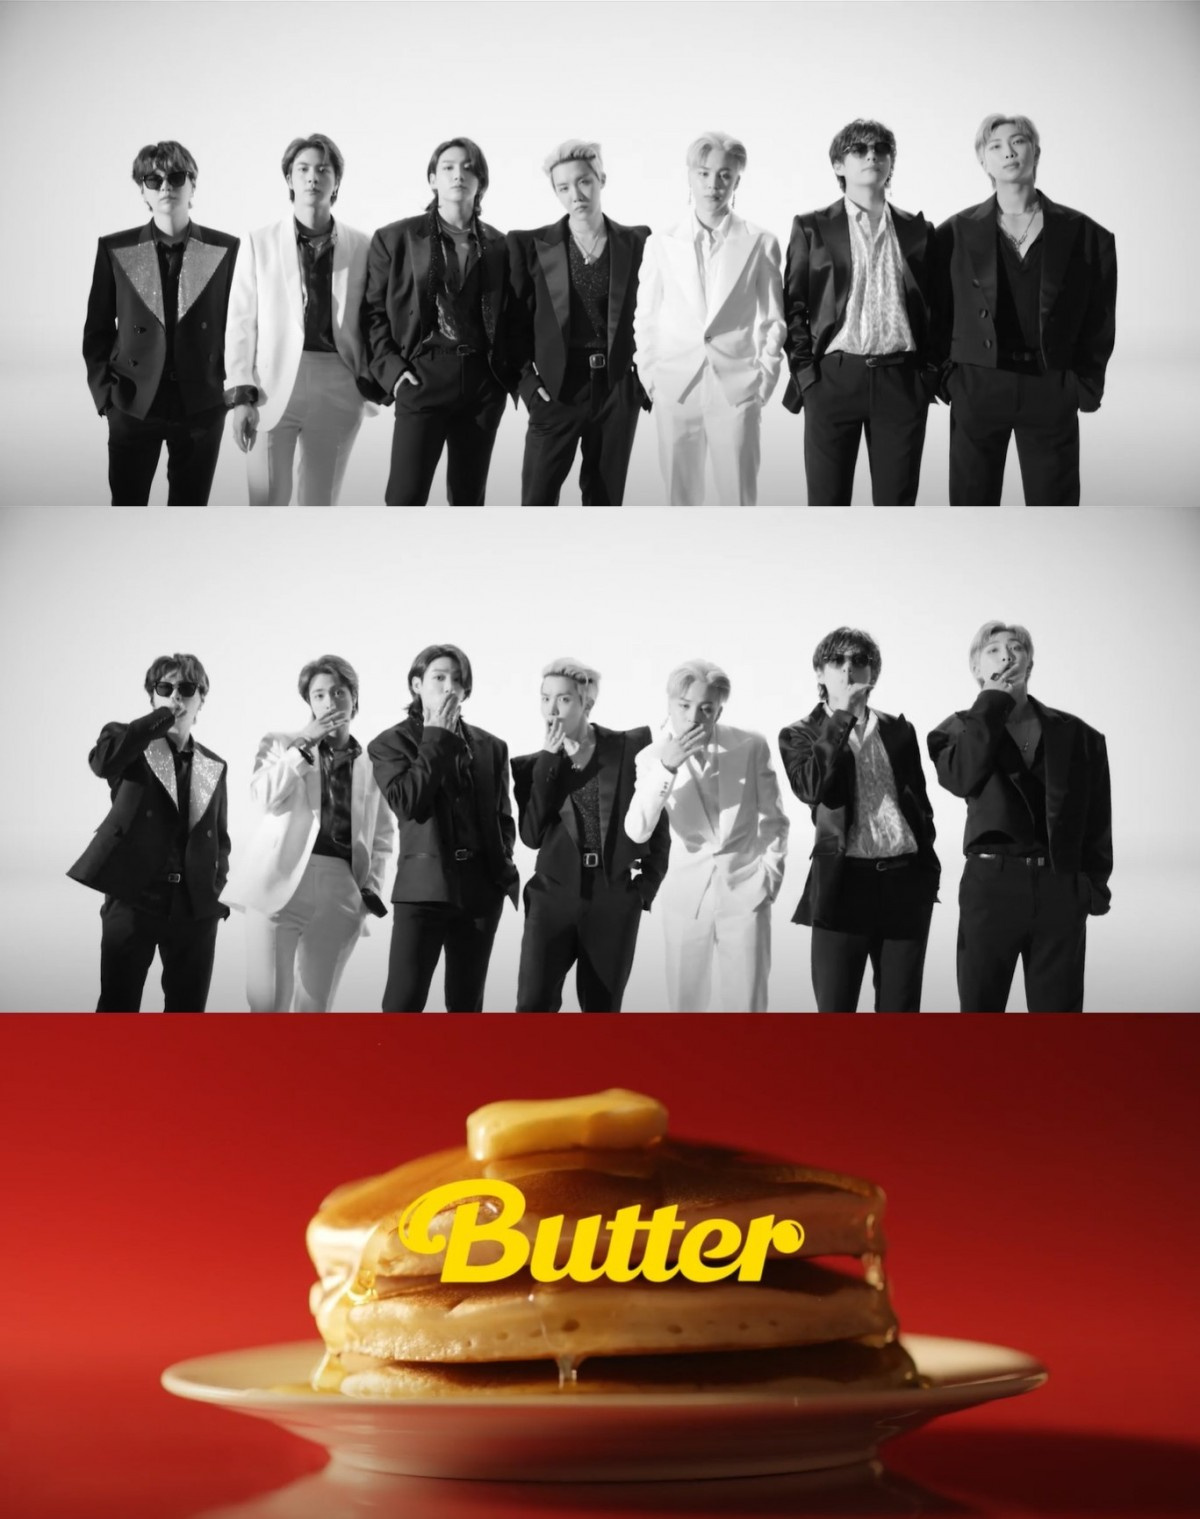 Bts Butter Mvティーザー公開 強烈な白黒のグループショット Oricon News